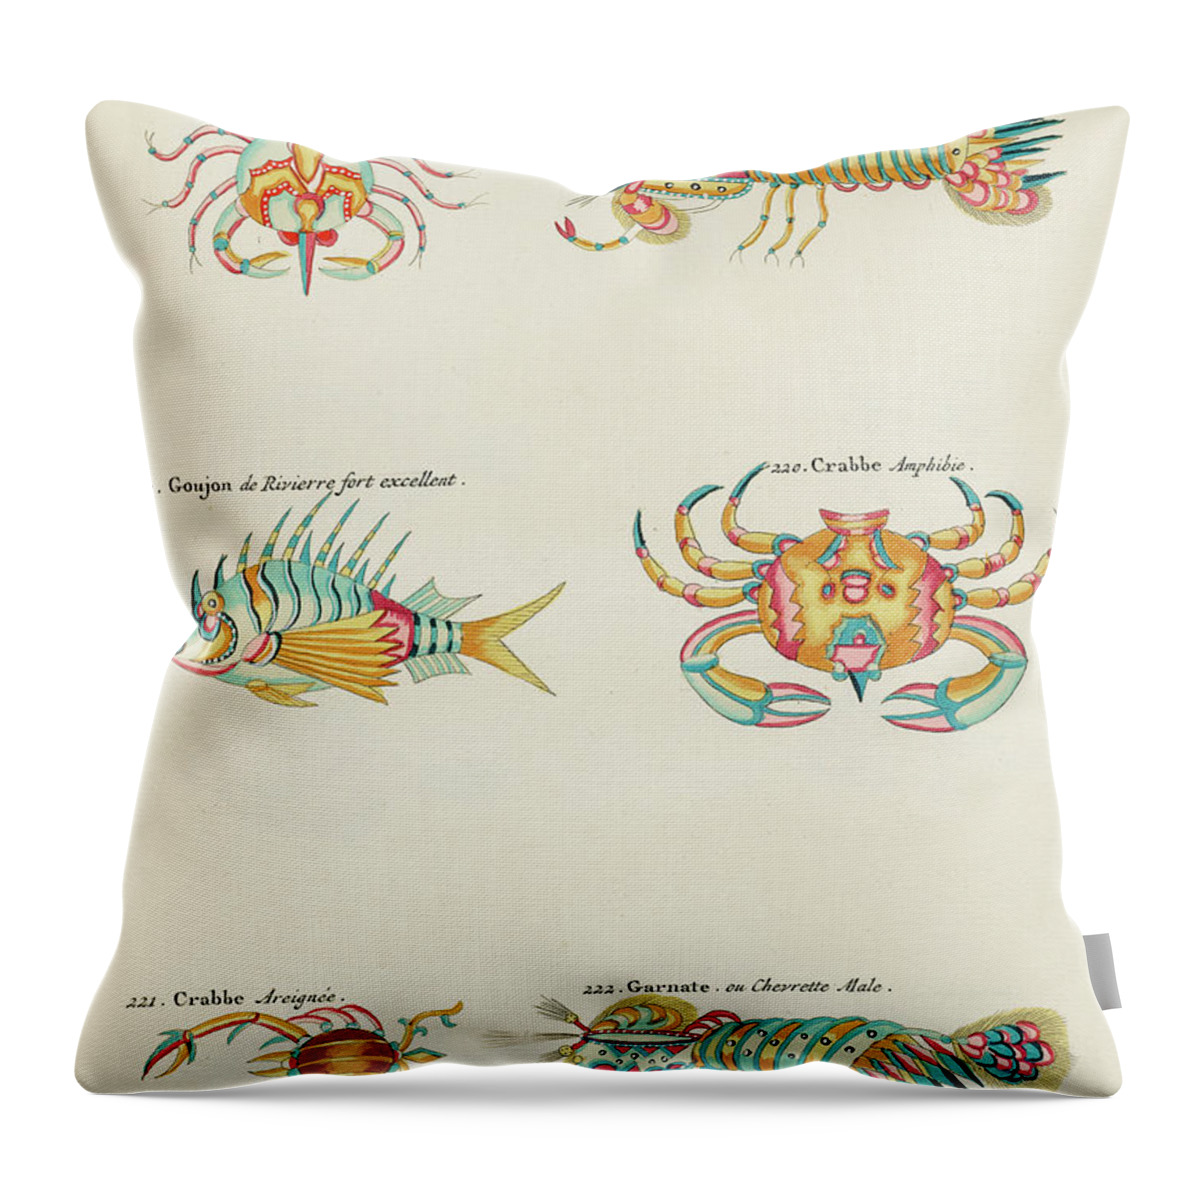 Fish Throw Pillow featuring the digital art Vintage, Whimsical Fish and Marine Life Illustration by Louis Renard - Crabbe, Goujon, Garnate by Louis Renard